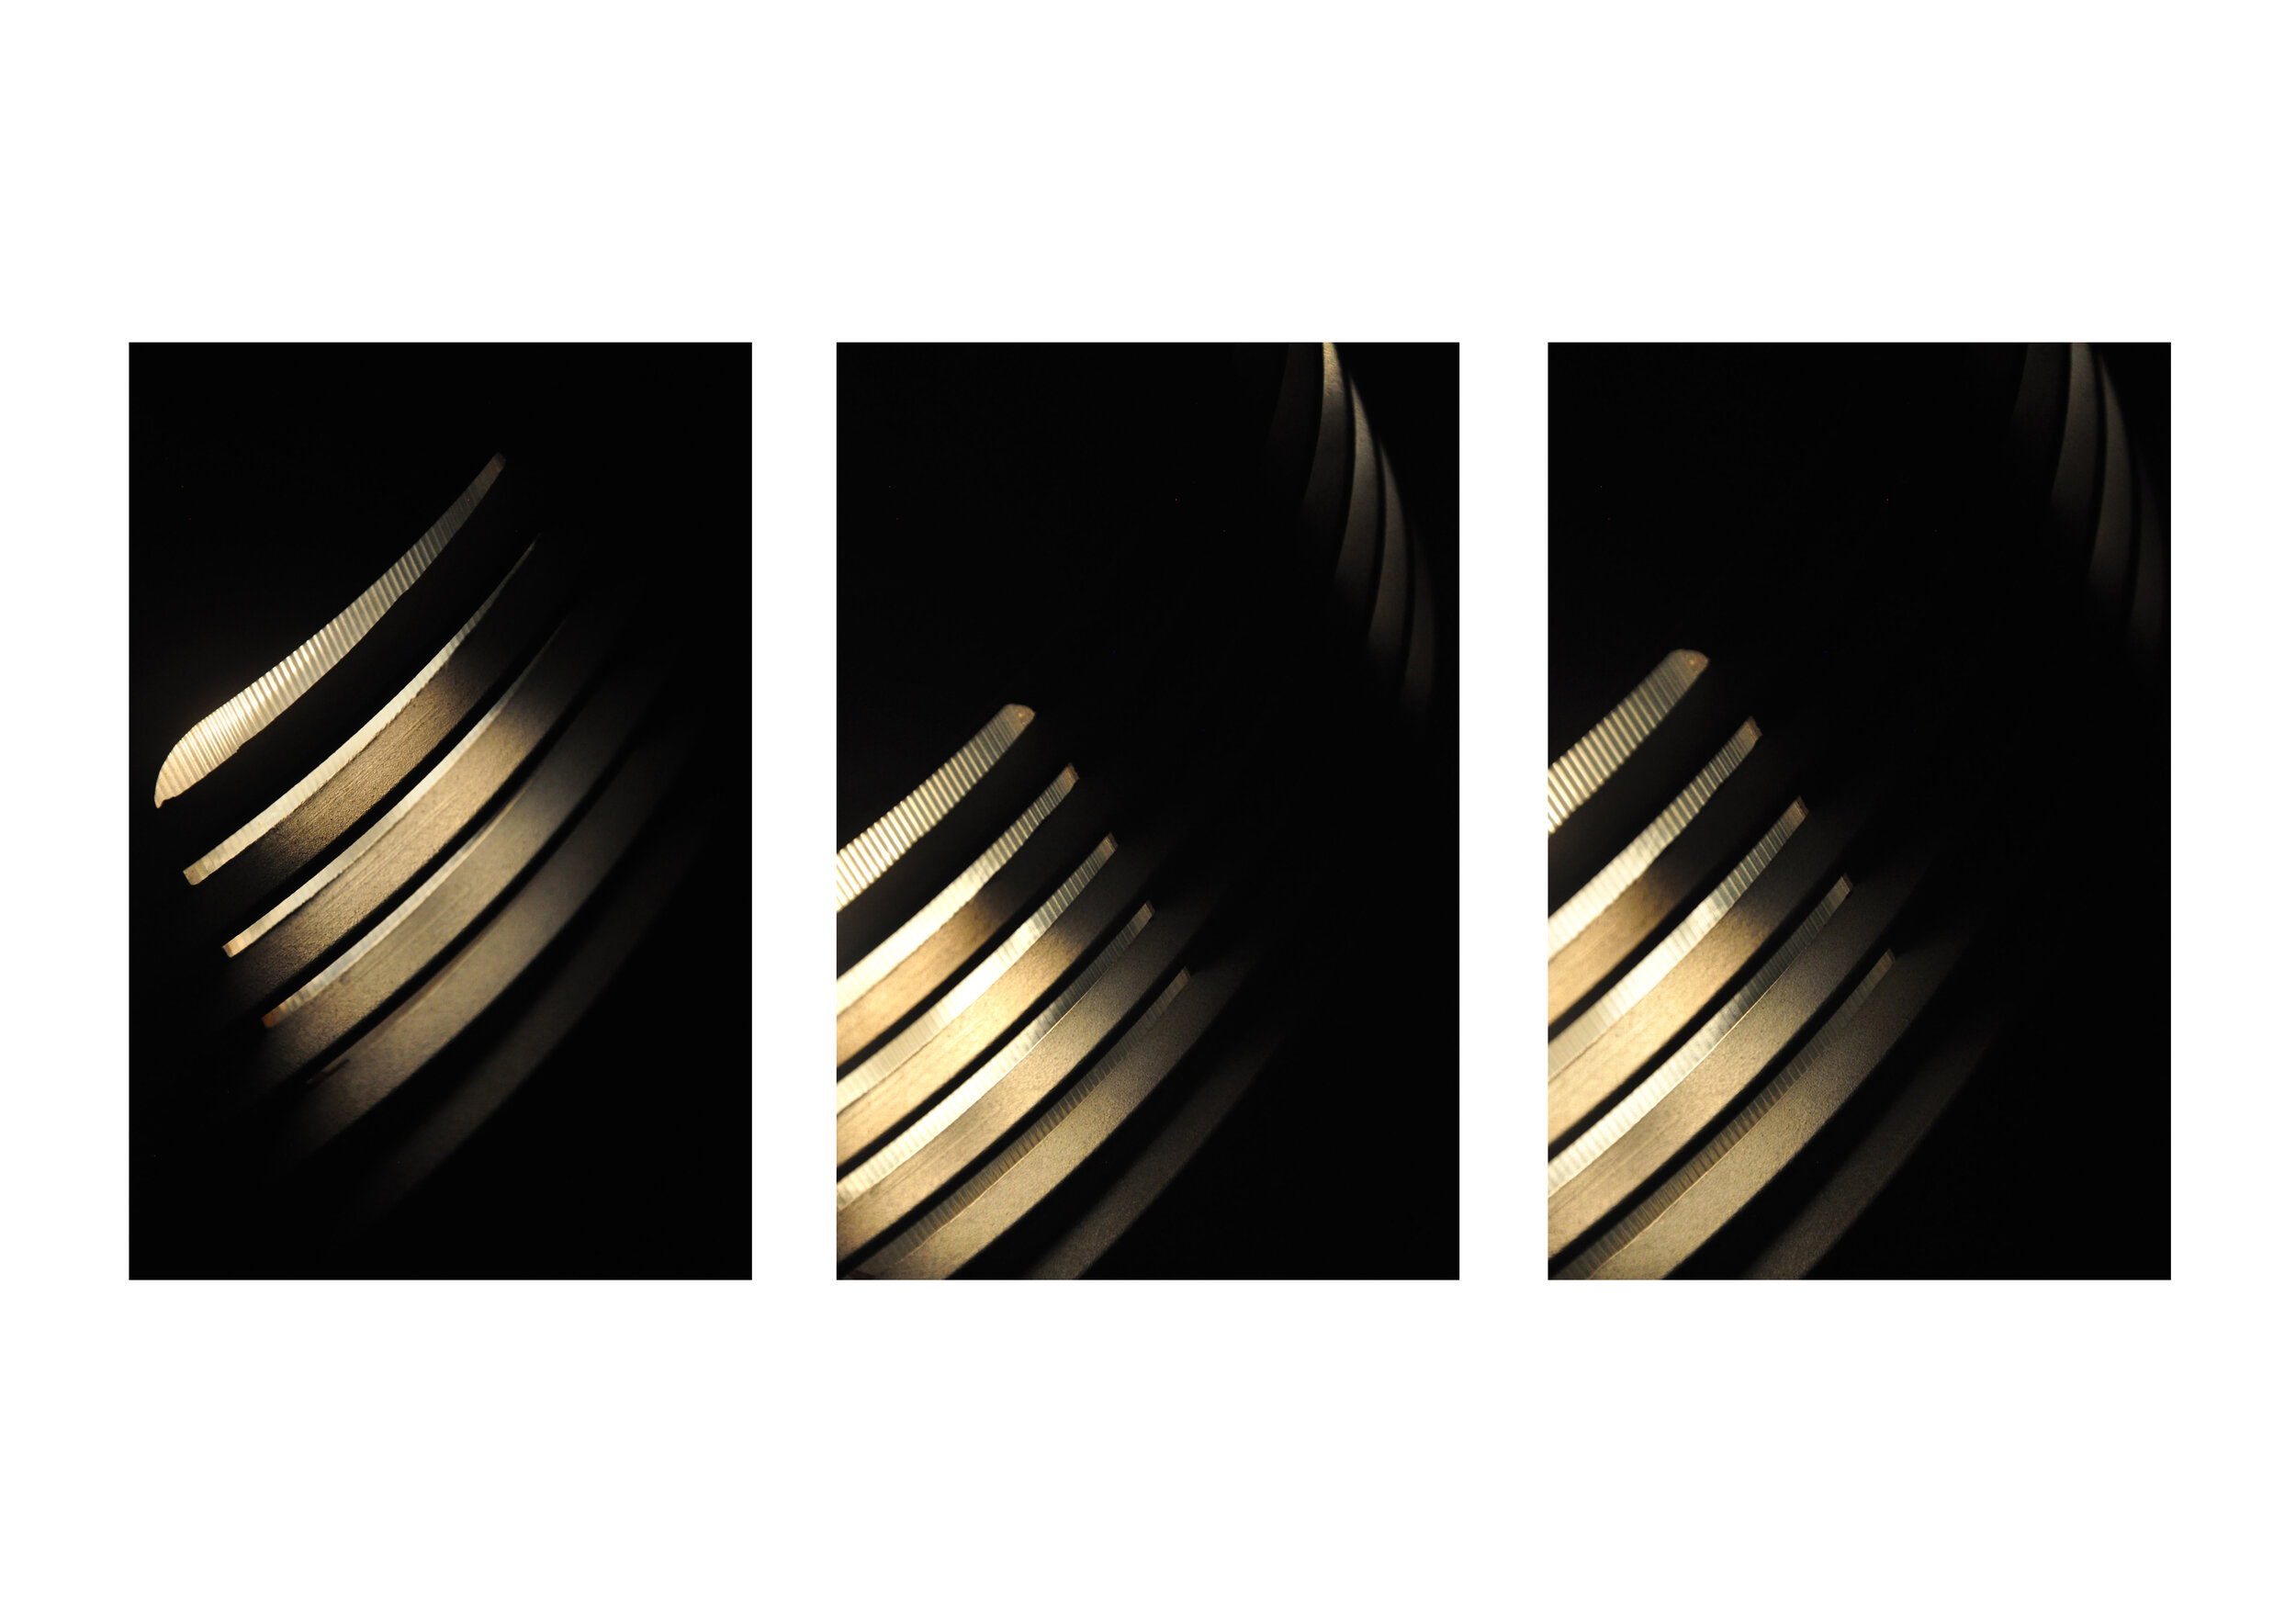 Light 07a + b + c, 2015 - Triptych